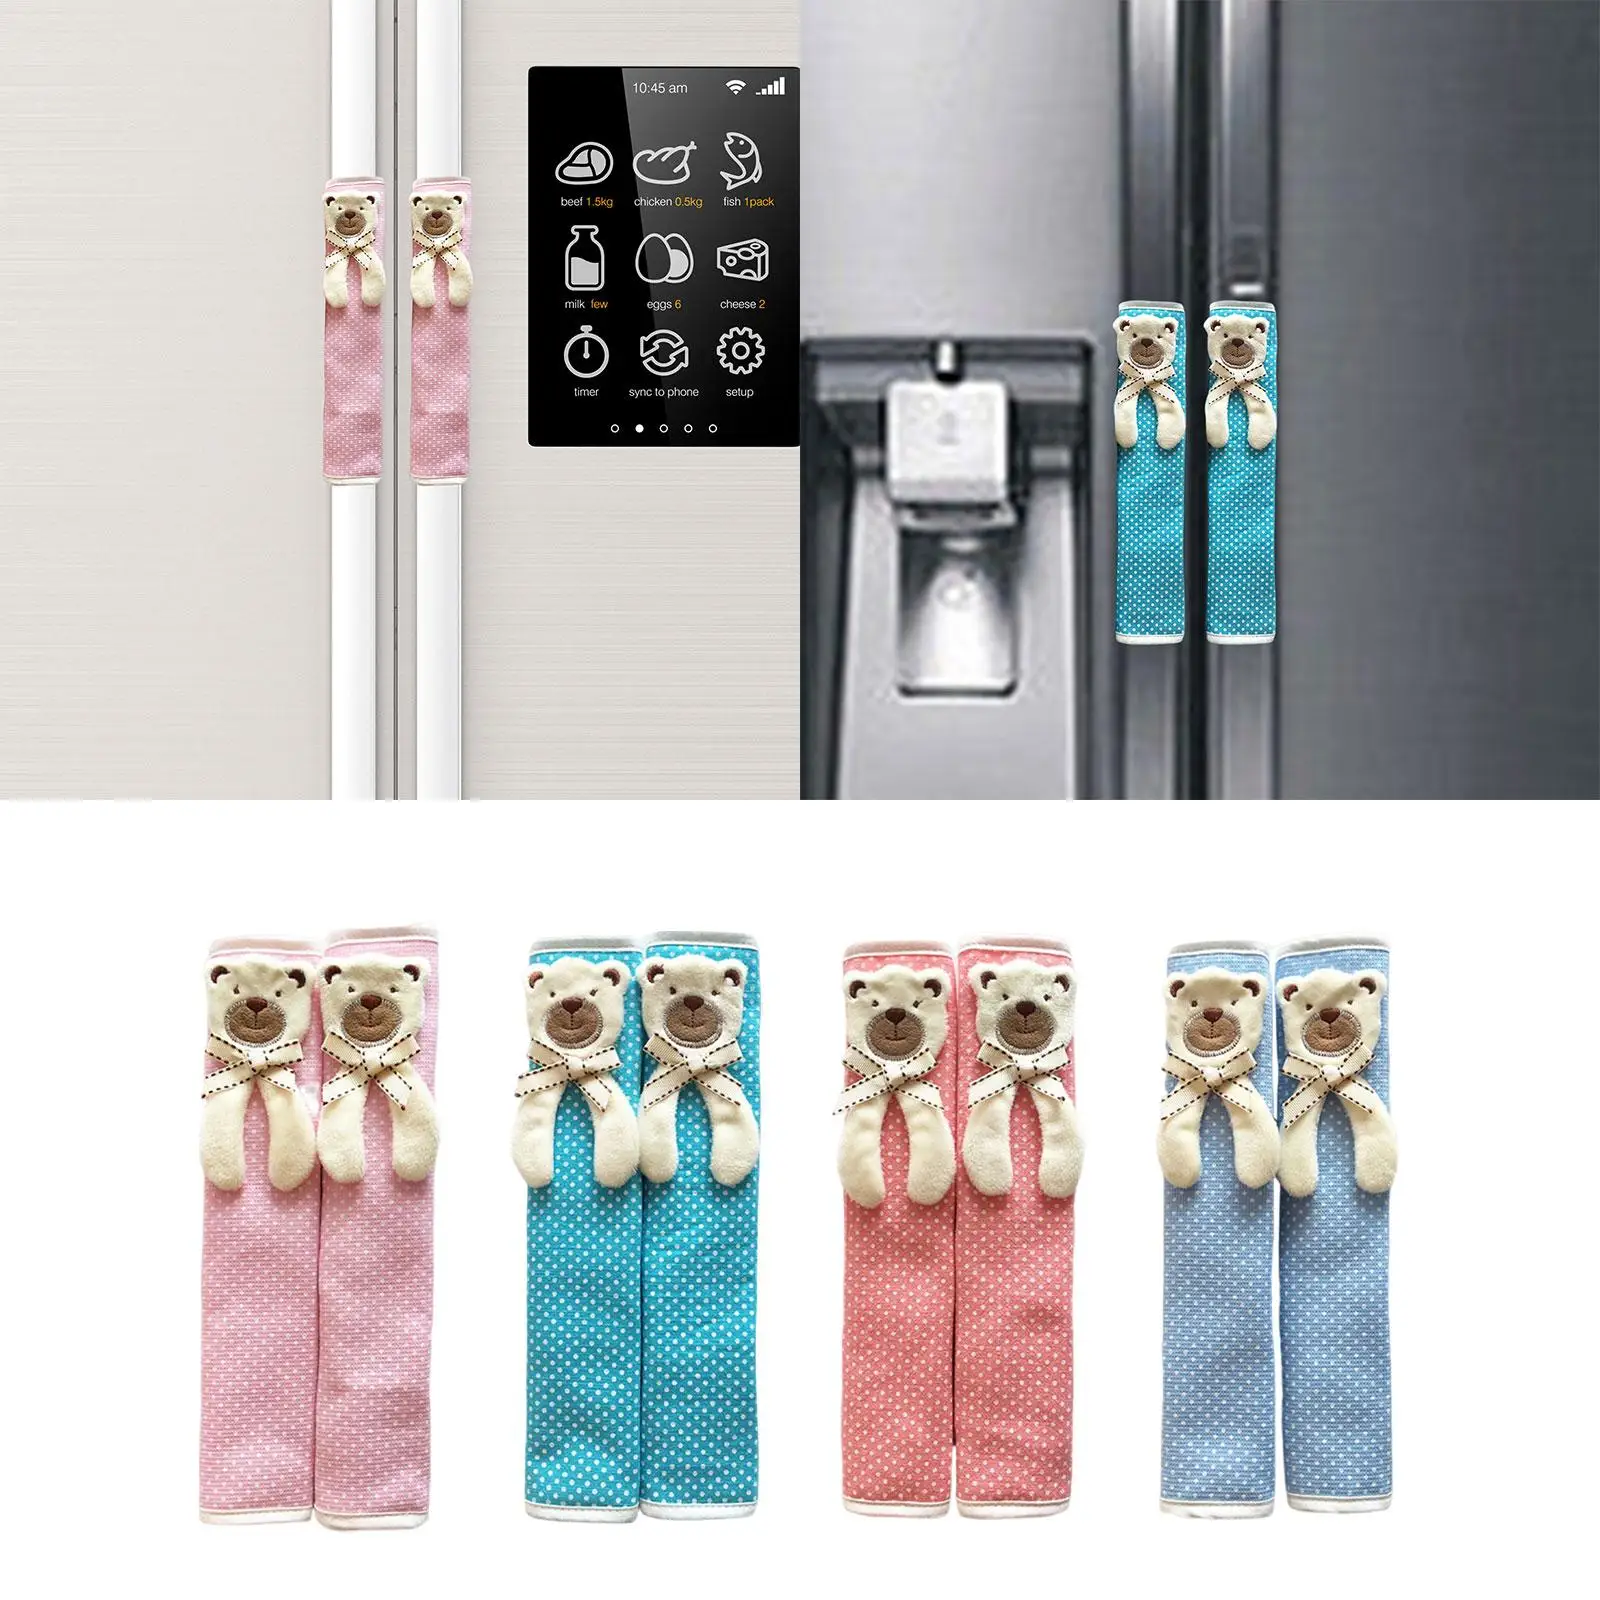 2x Refrigerator Door Handle Covers Bear Door Knob Cover AntiSlip Electrical Kitchen Appliances Gloves Ovens Door Cloth for Oven